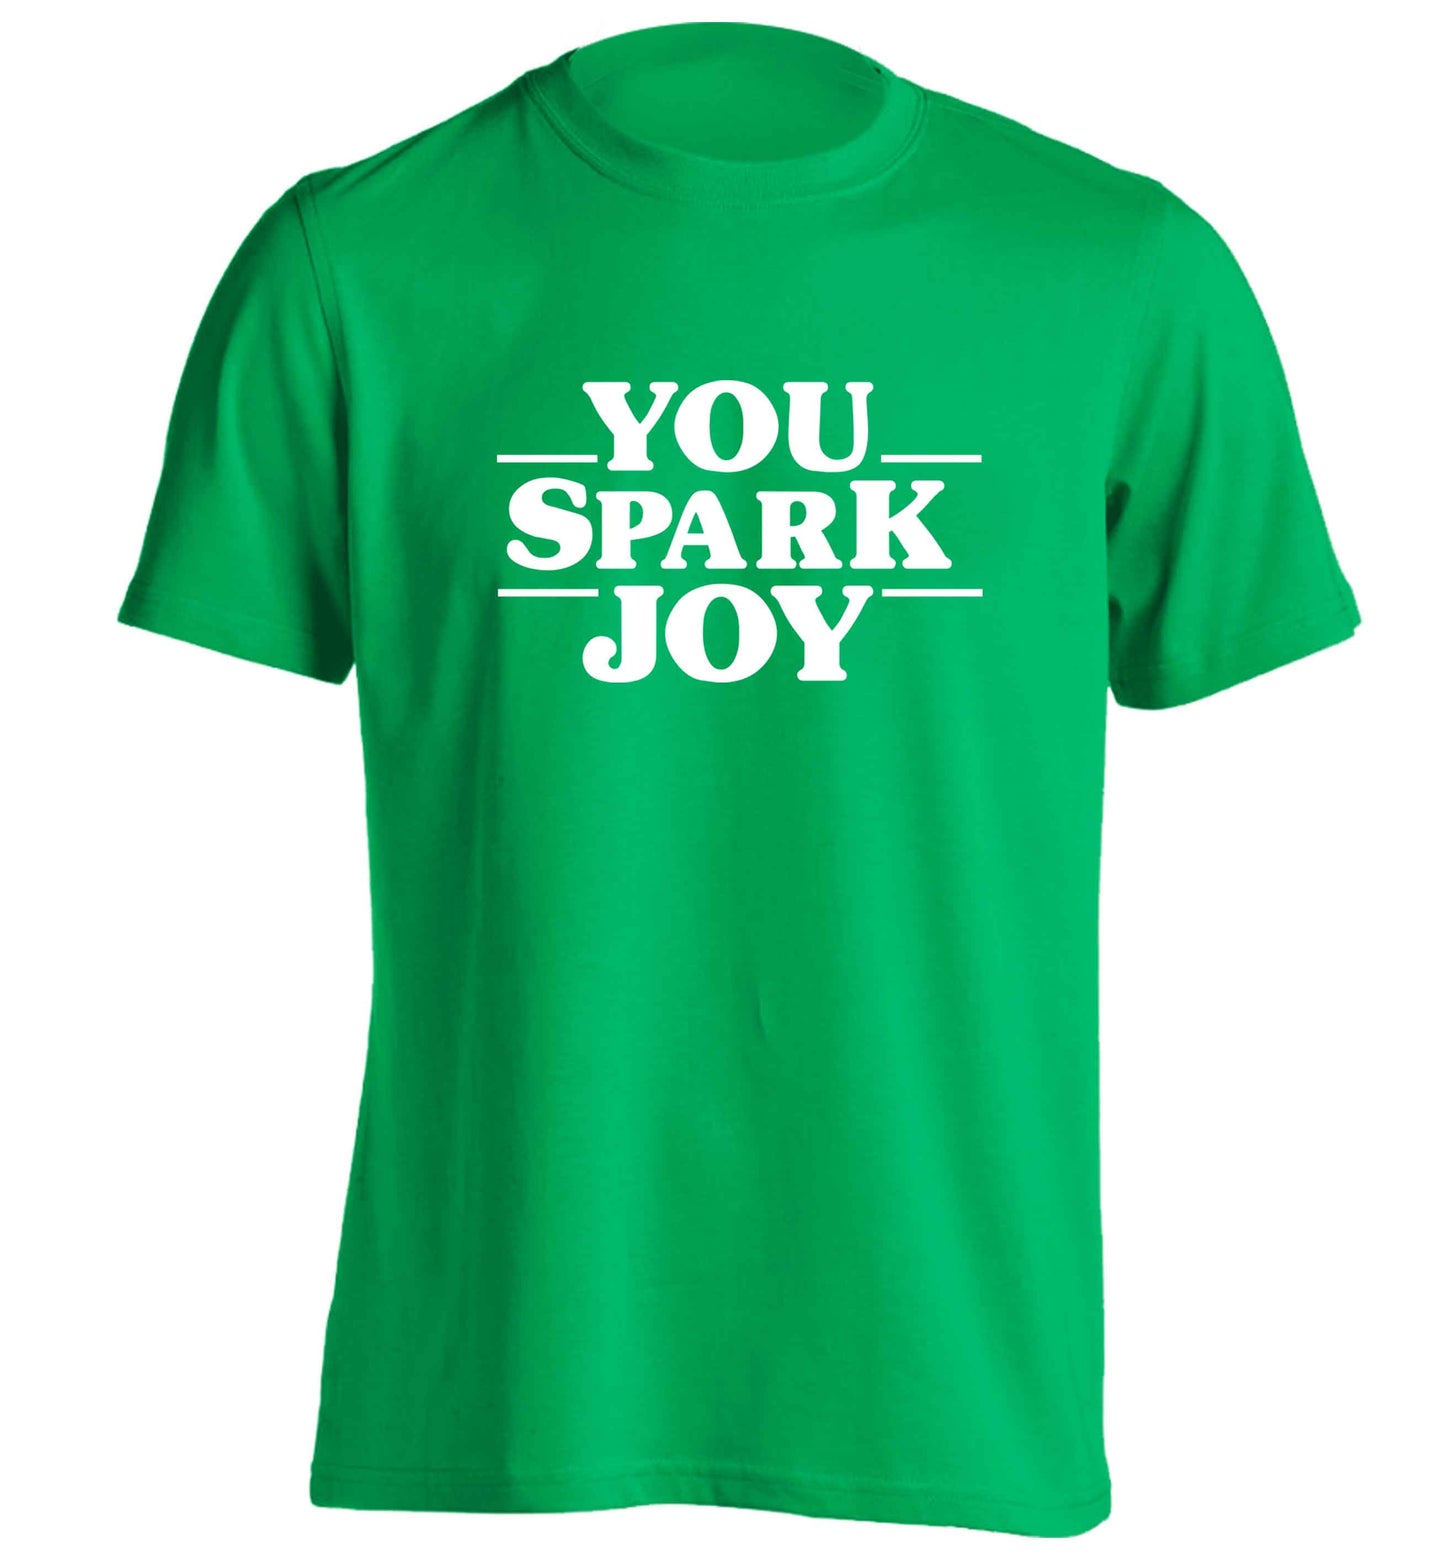 You spark joy adults unisex green Tshirt 2XL